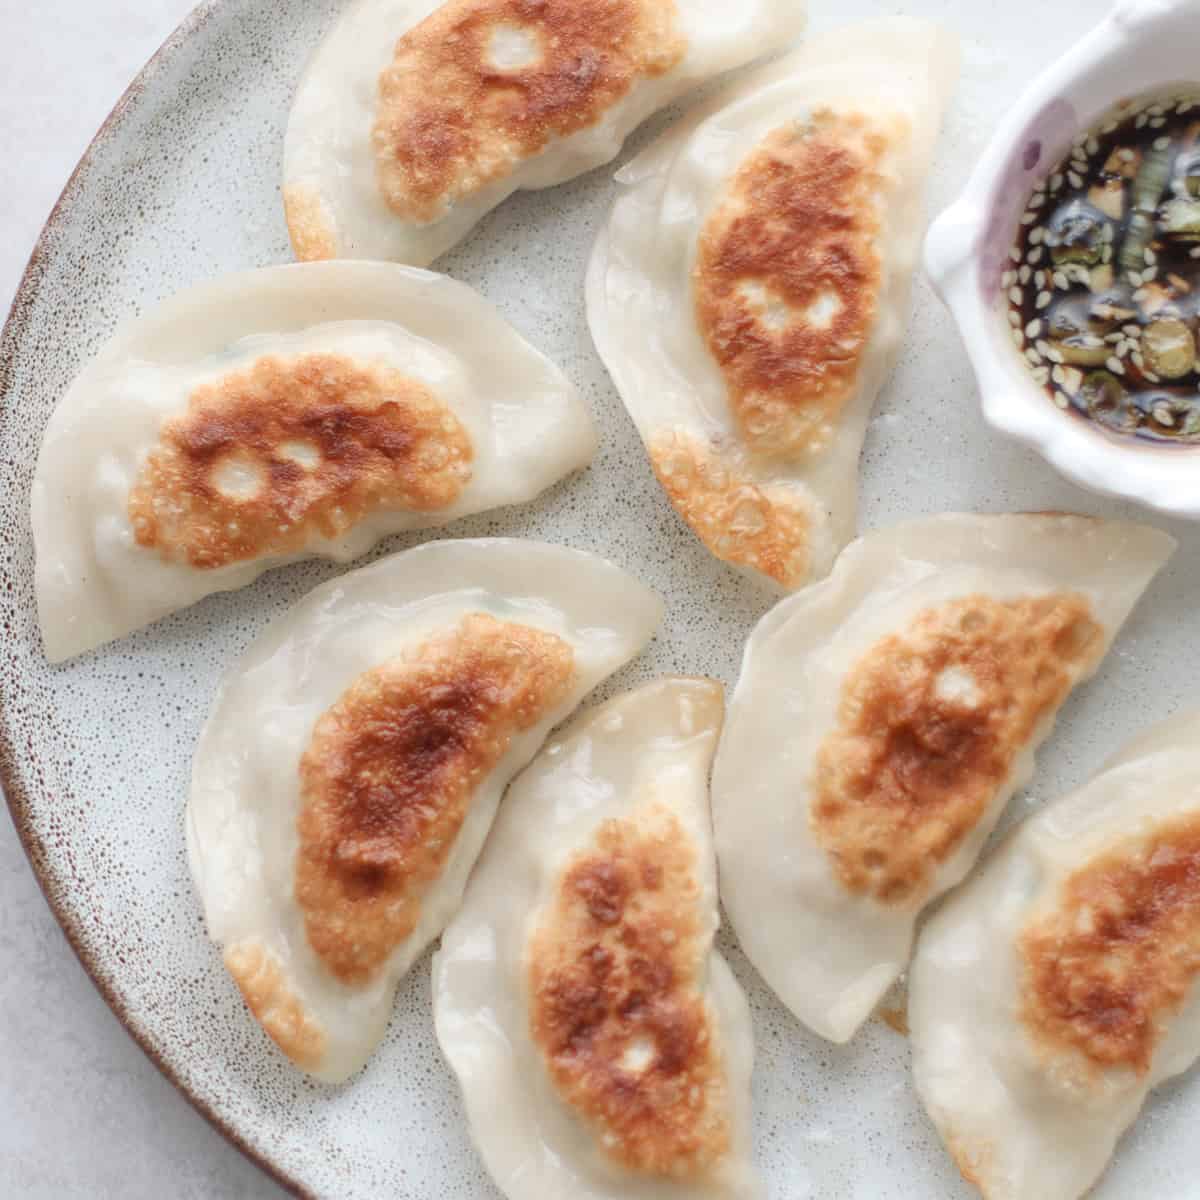 https://www.mjandhungryman.com/wp-content/uploads/2012/06/Korean-dumplings-mandu.jpg